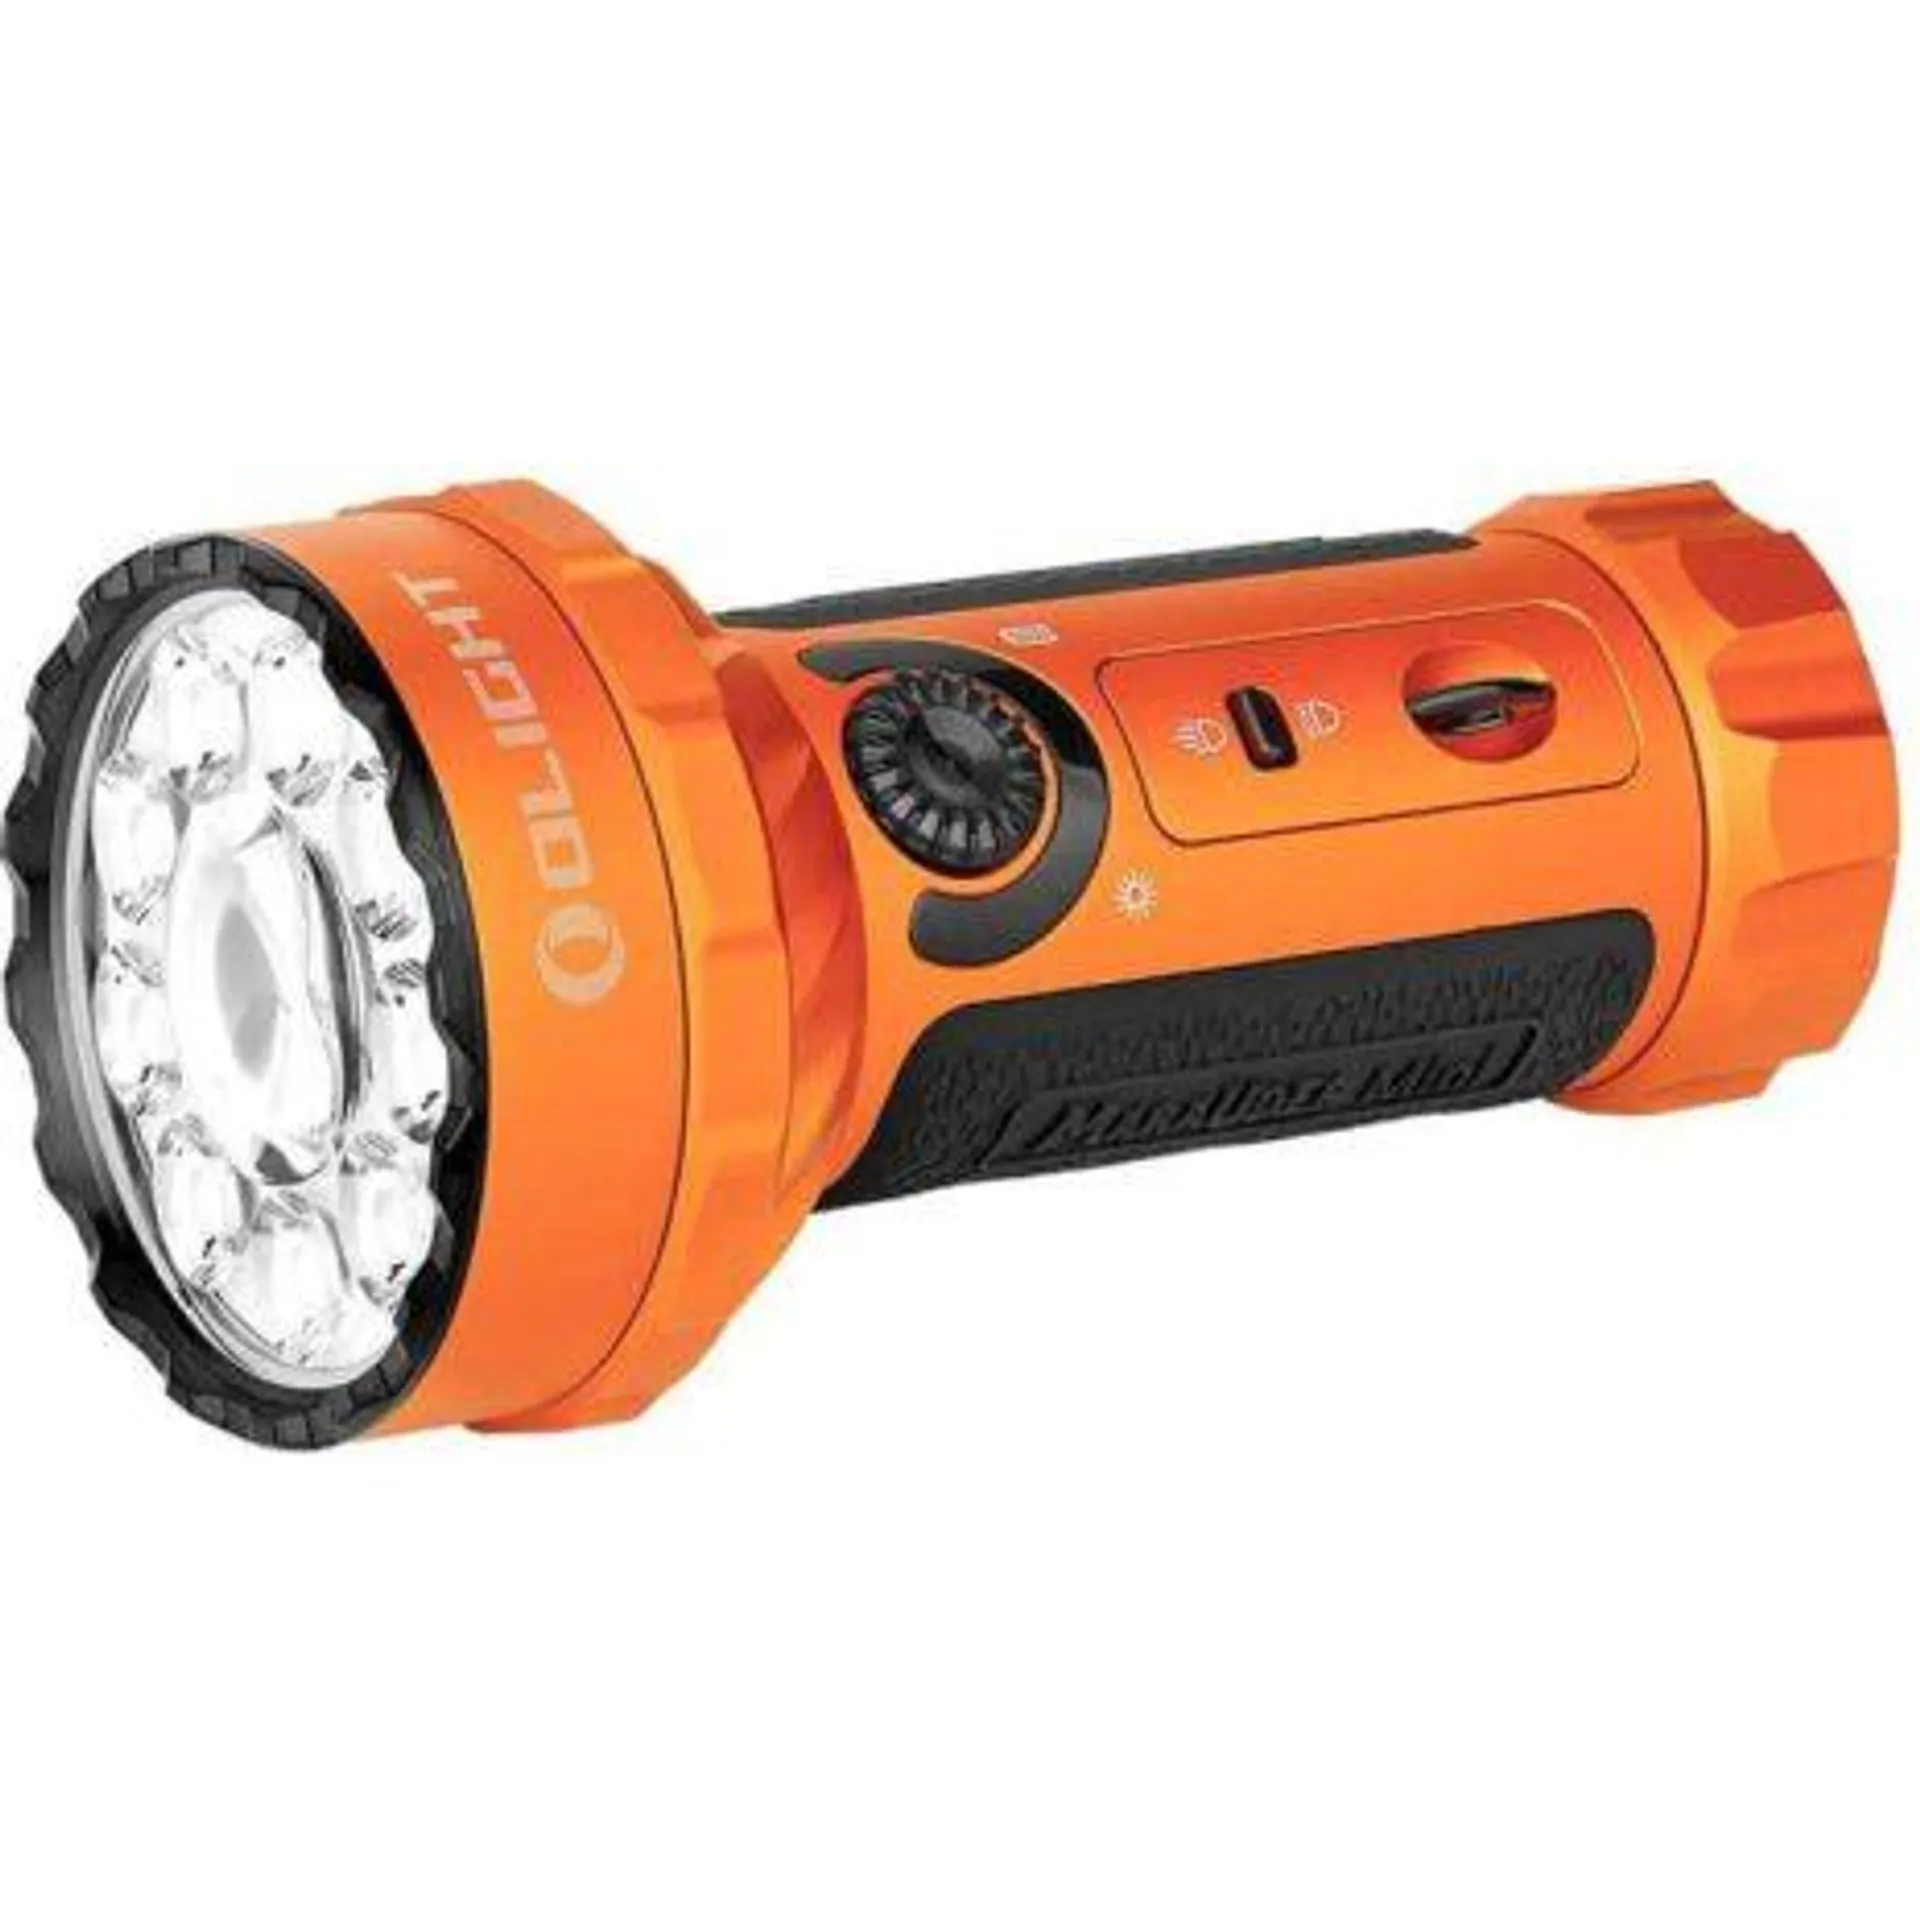 Olight Marauder Mini 7000 Lumen Flashlight – Orange